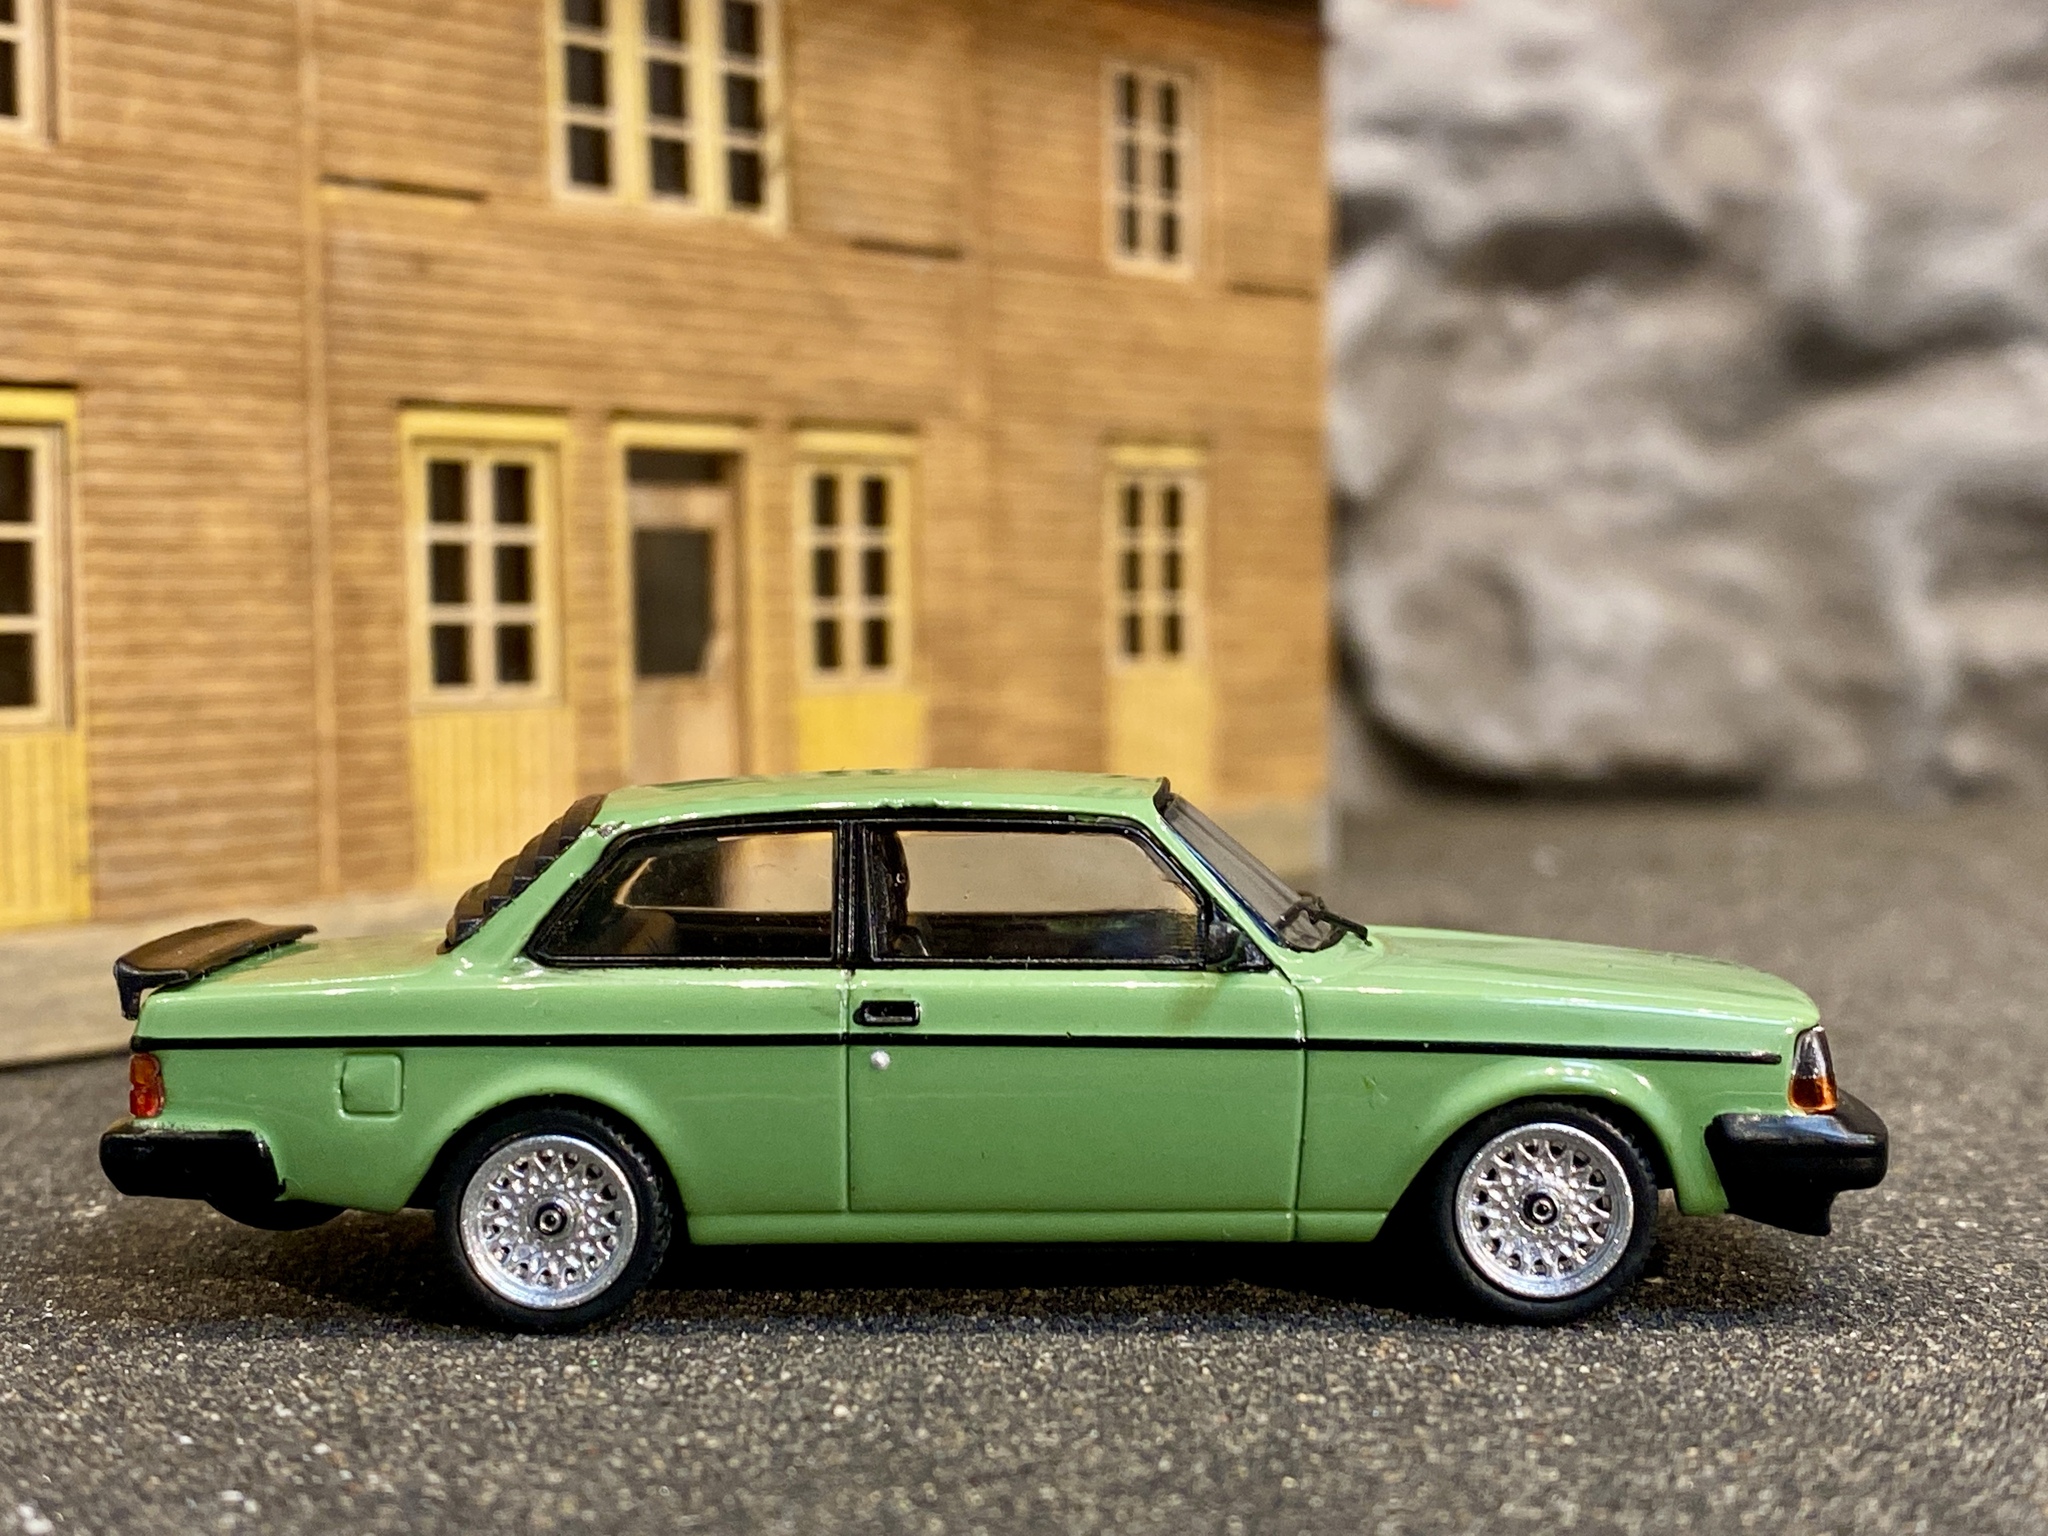 Skala 1/64 Volvo 242 Custom, Grön fr TARMAC